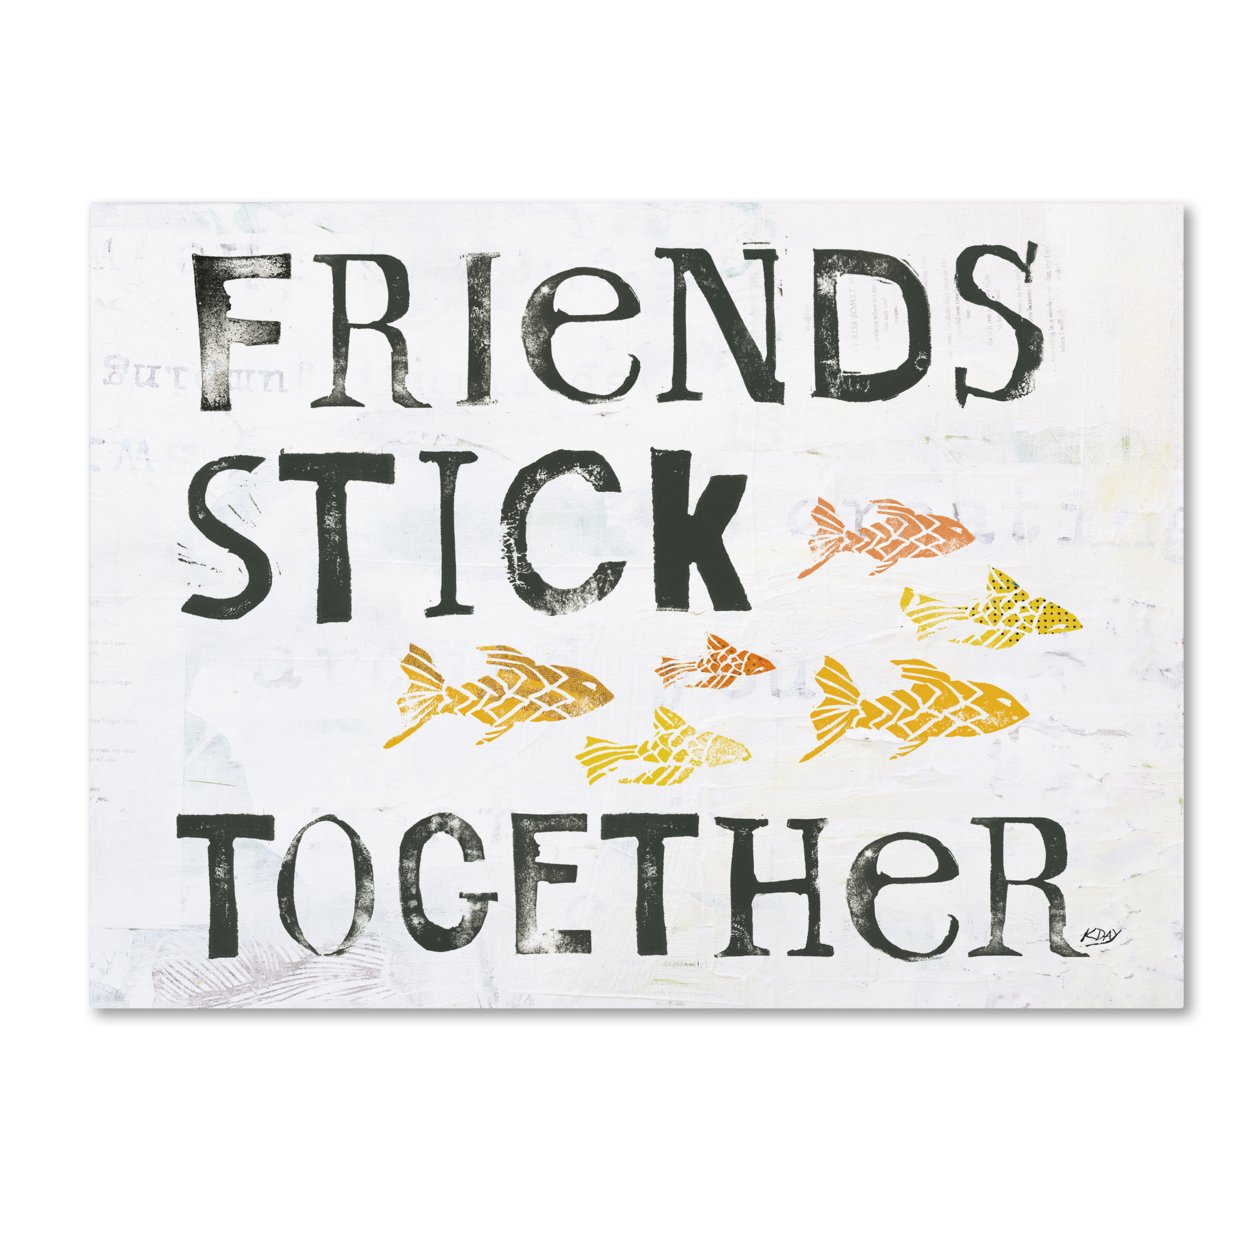 Kellie Day 'Friends Stick Together' Canvas Art 18 X 24